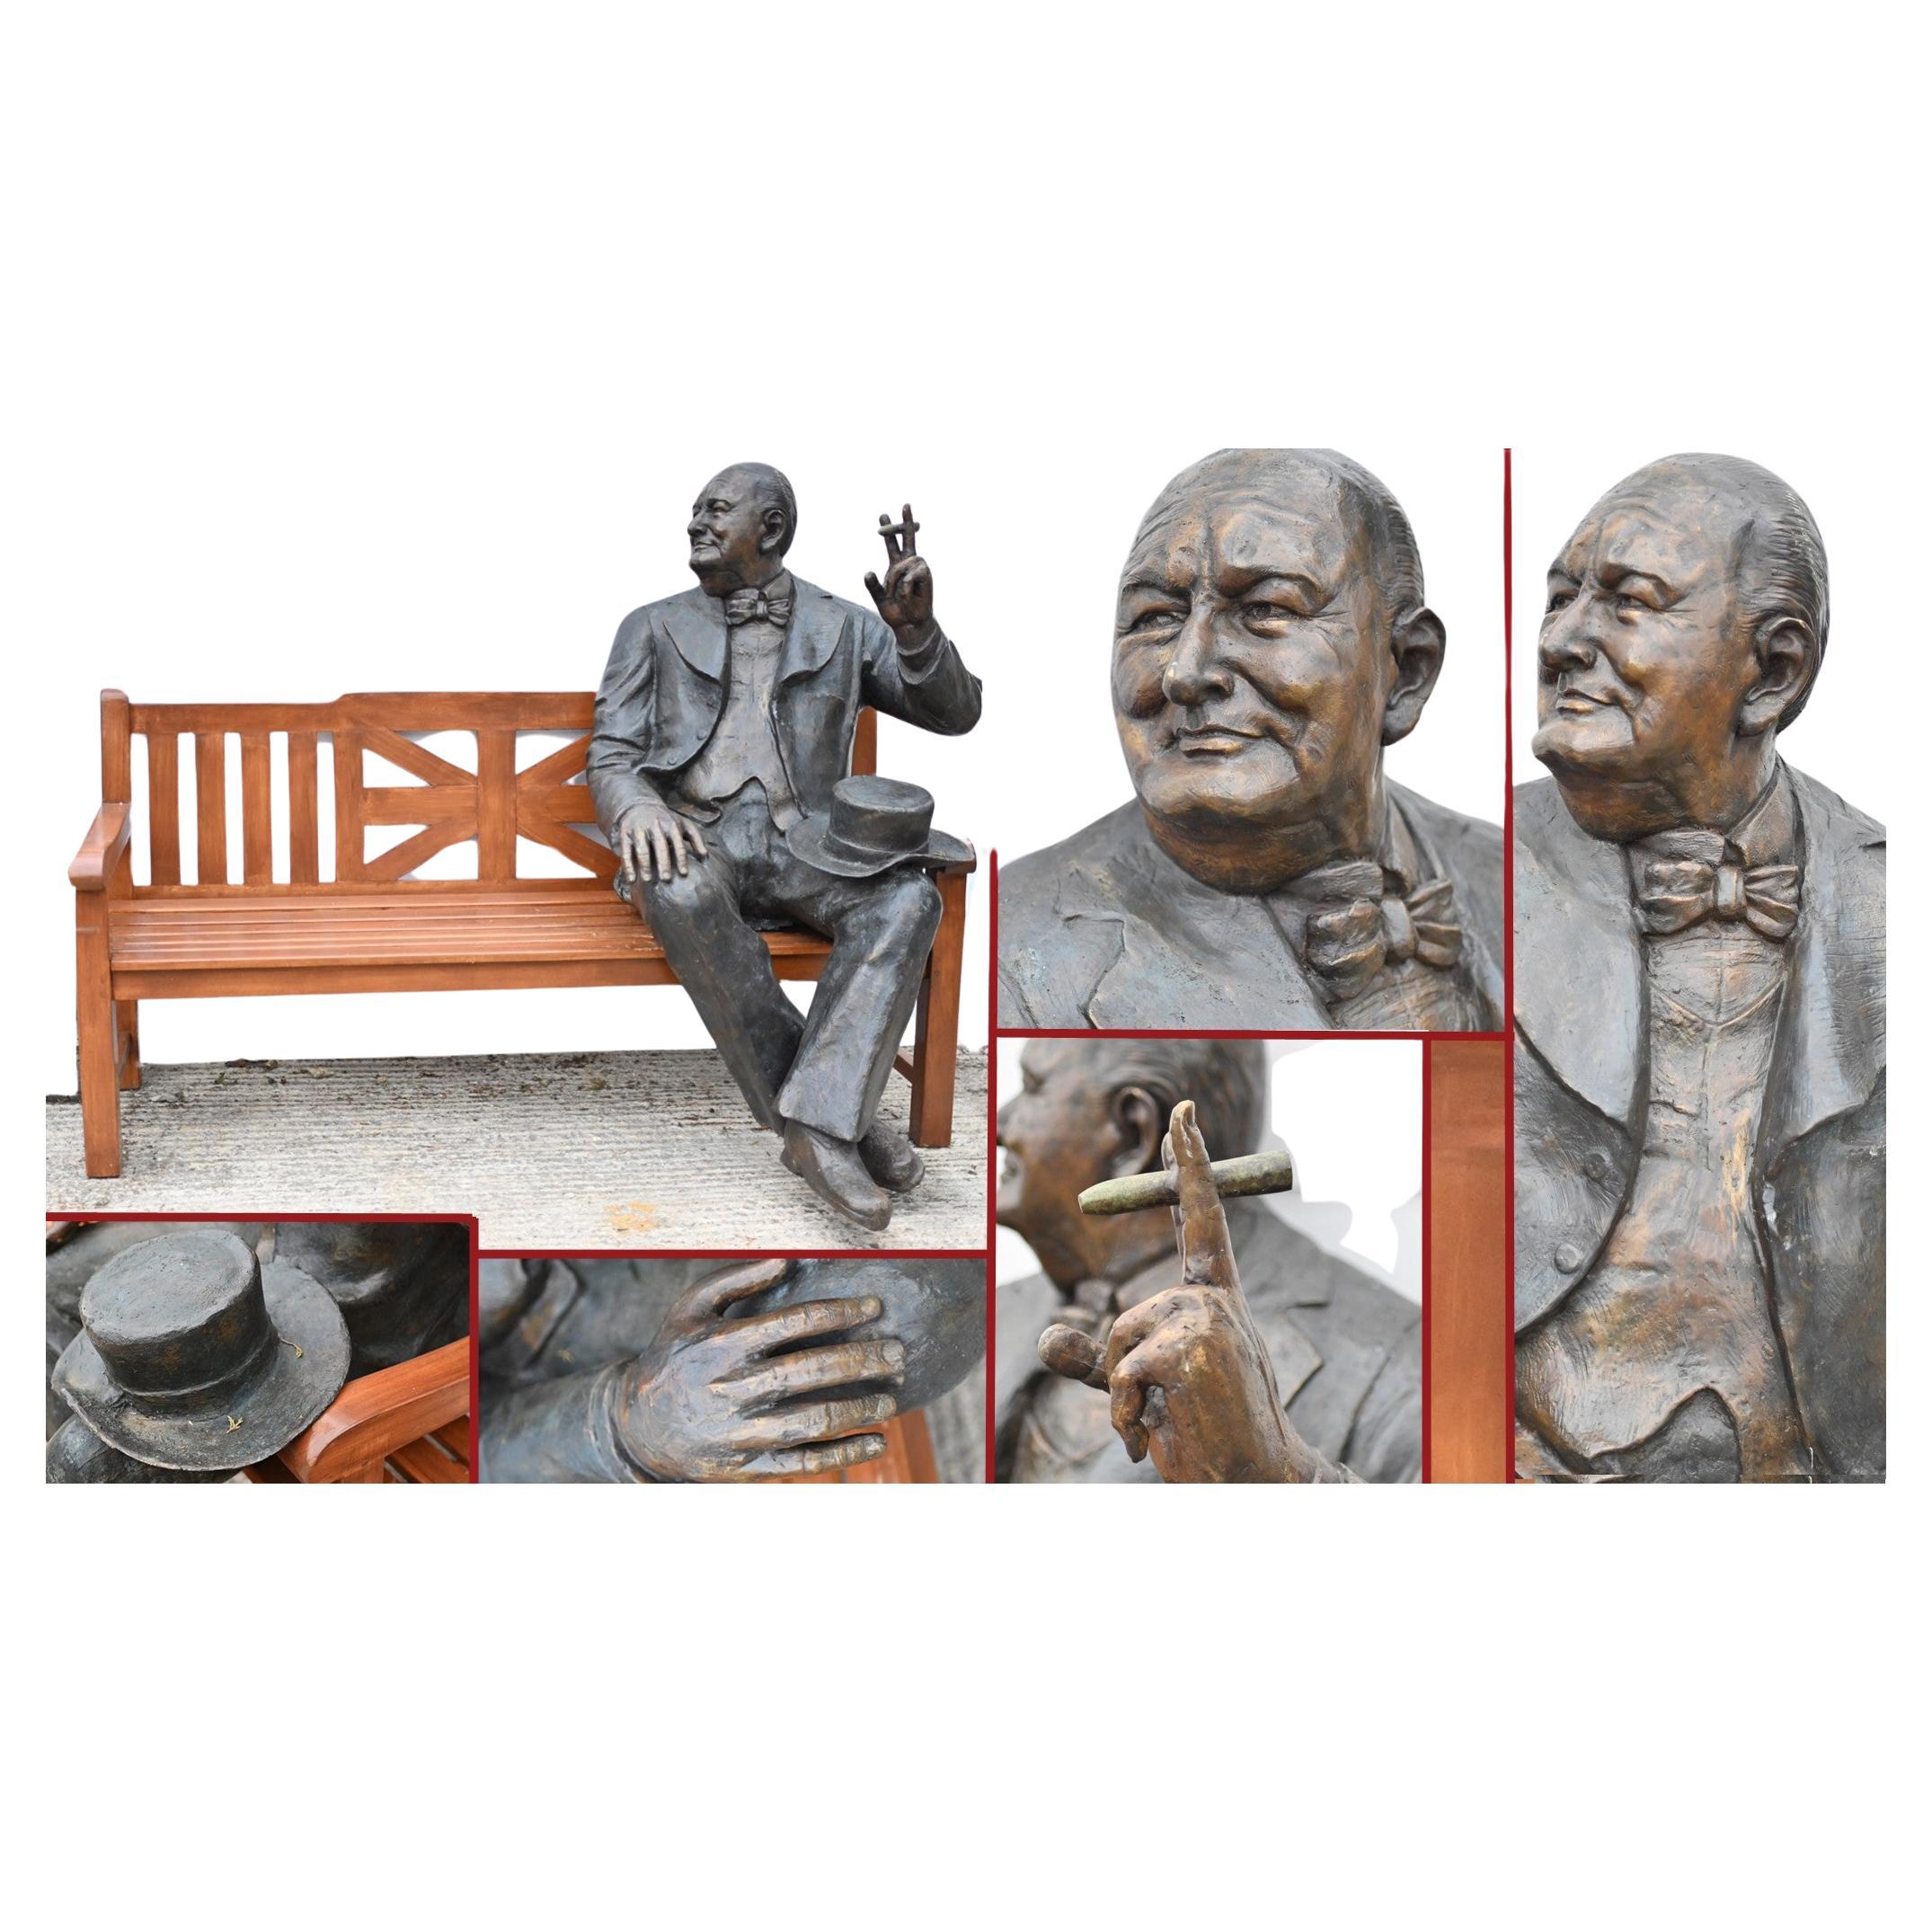 Winston Churchill Bench Bronze Statue Garden Casting Seat British PM